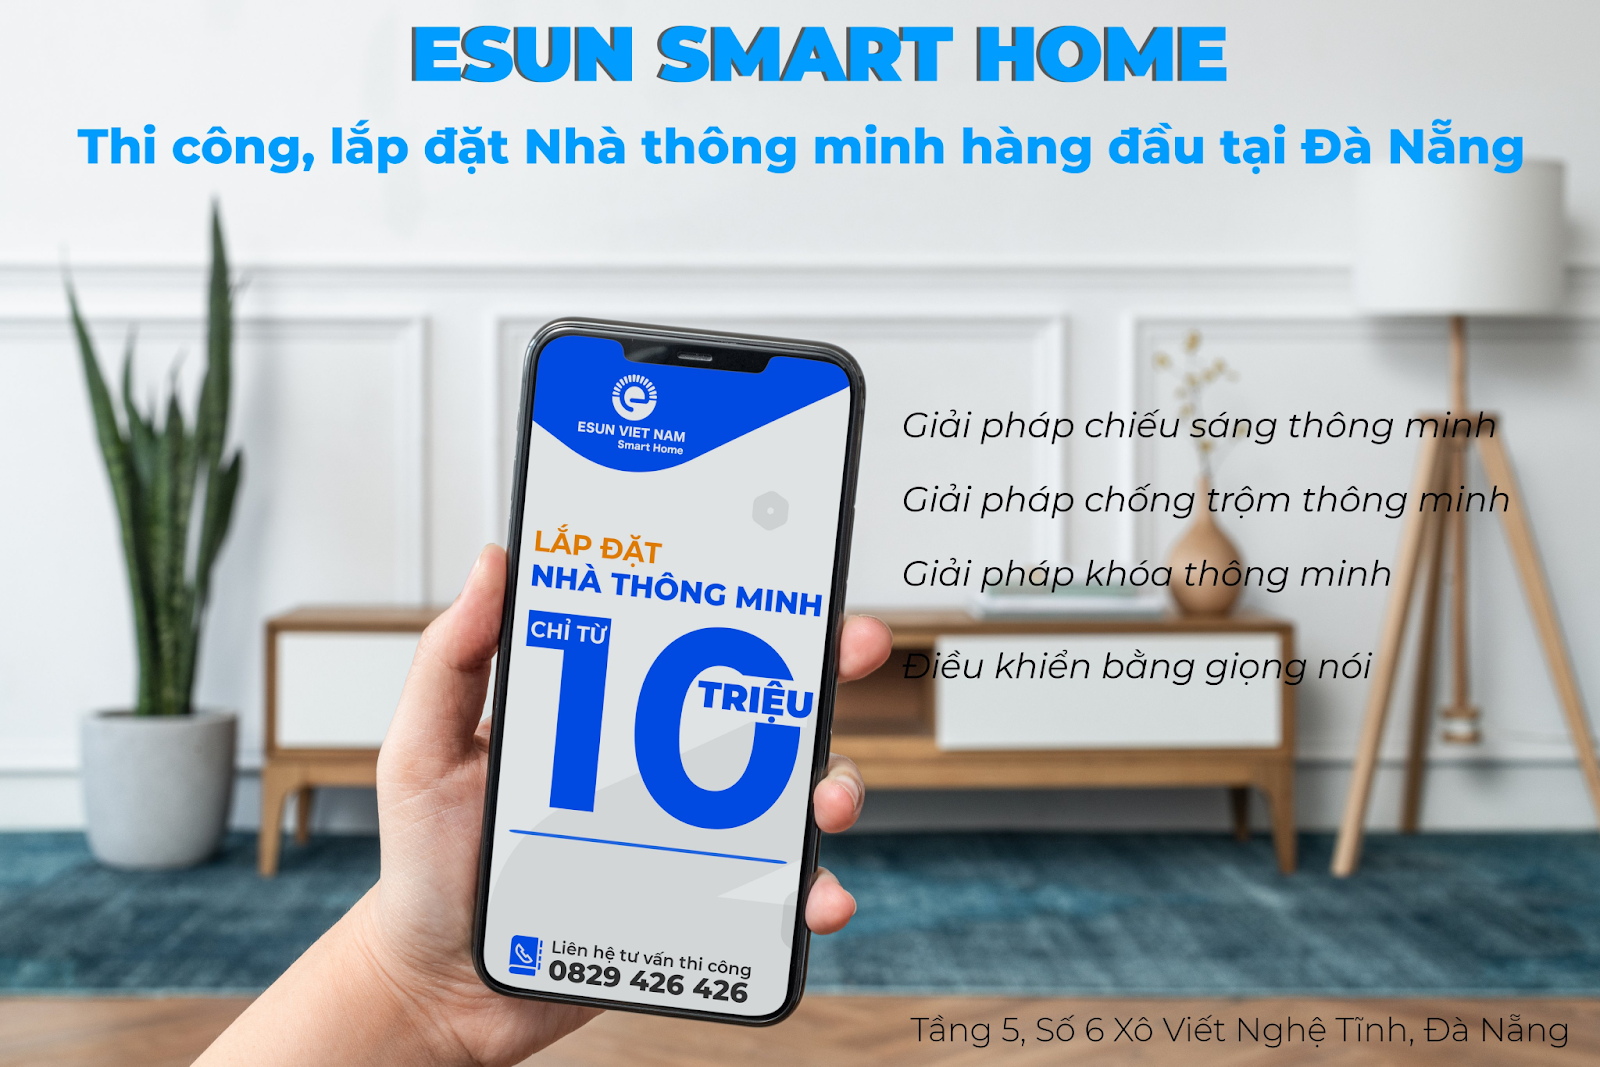 ESUN Smart Home